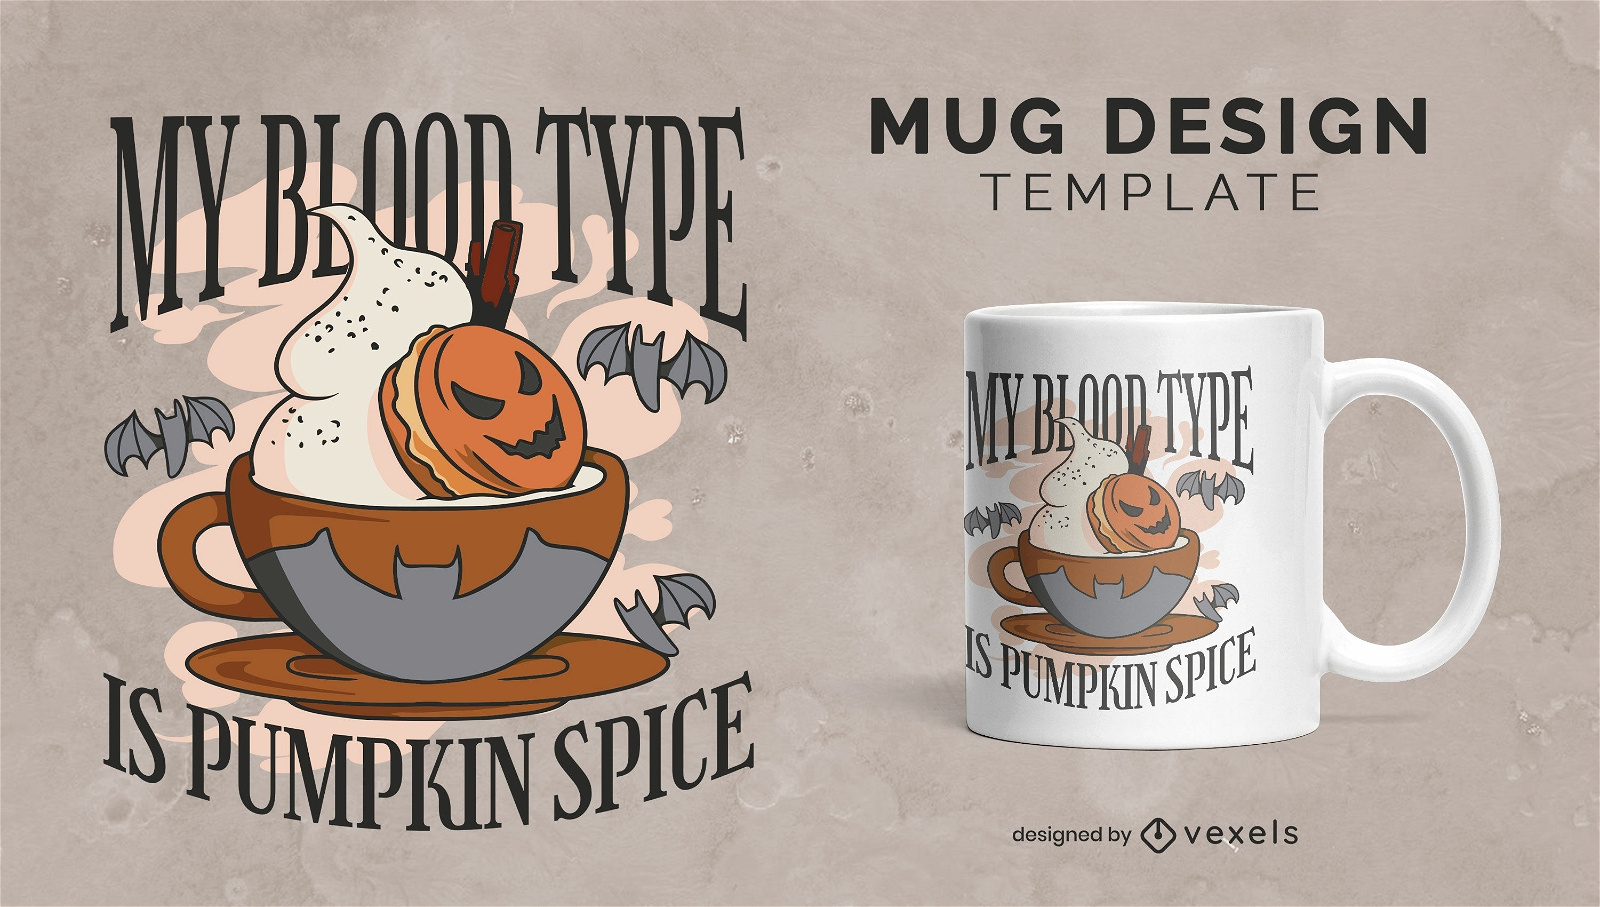 Pumpkin spice Halloween mug design